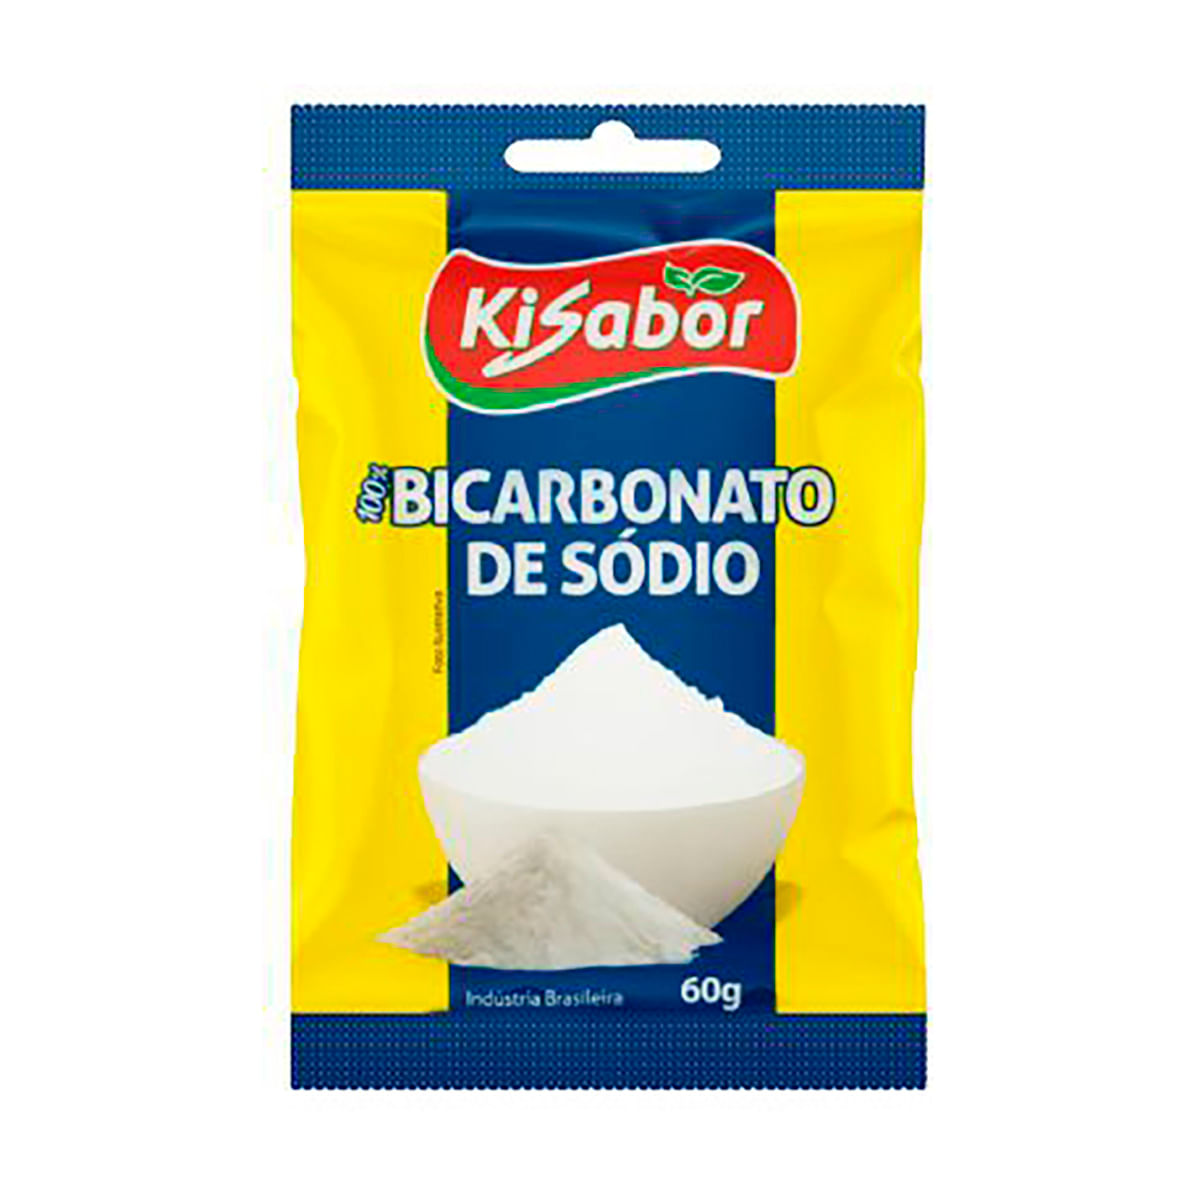 bicarbonato-sodio-kisabor-60g-1.jpg